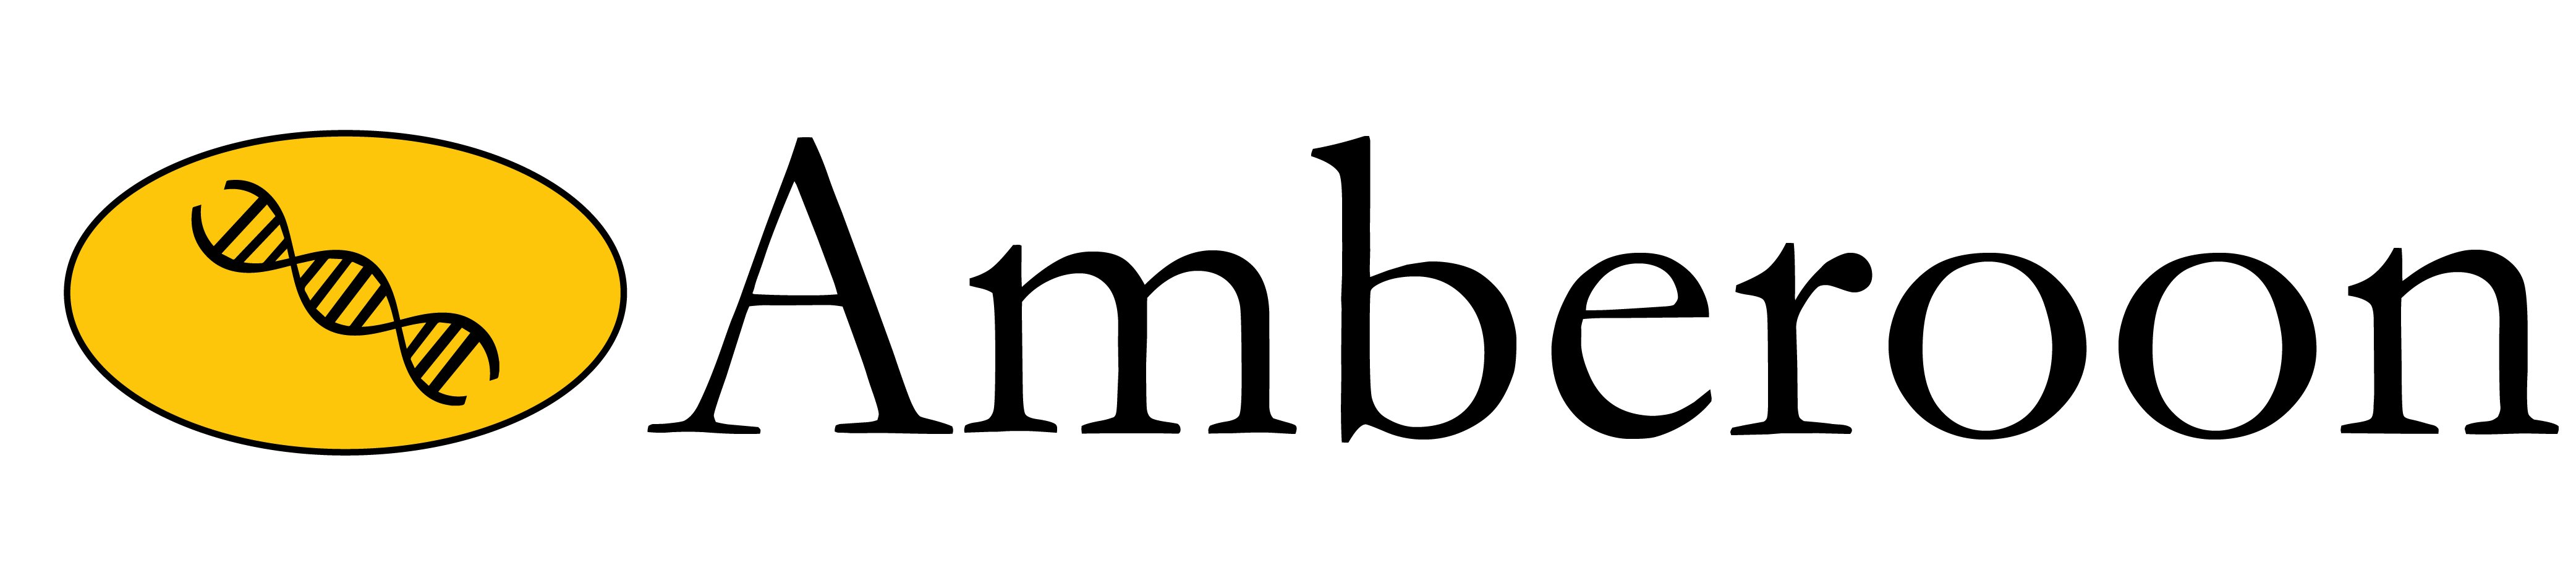 main-header-logo